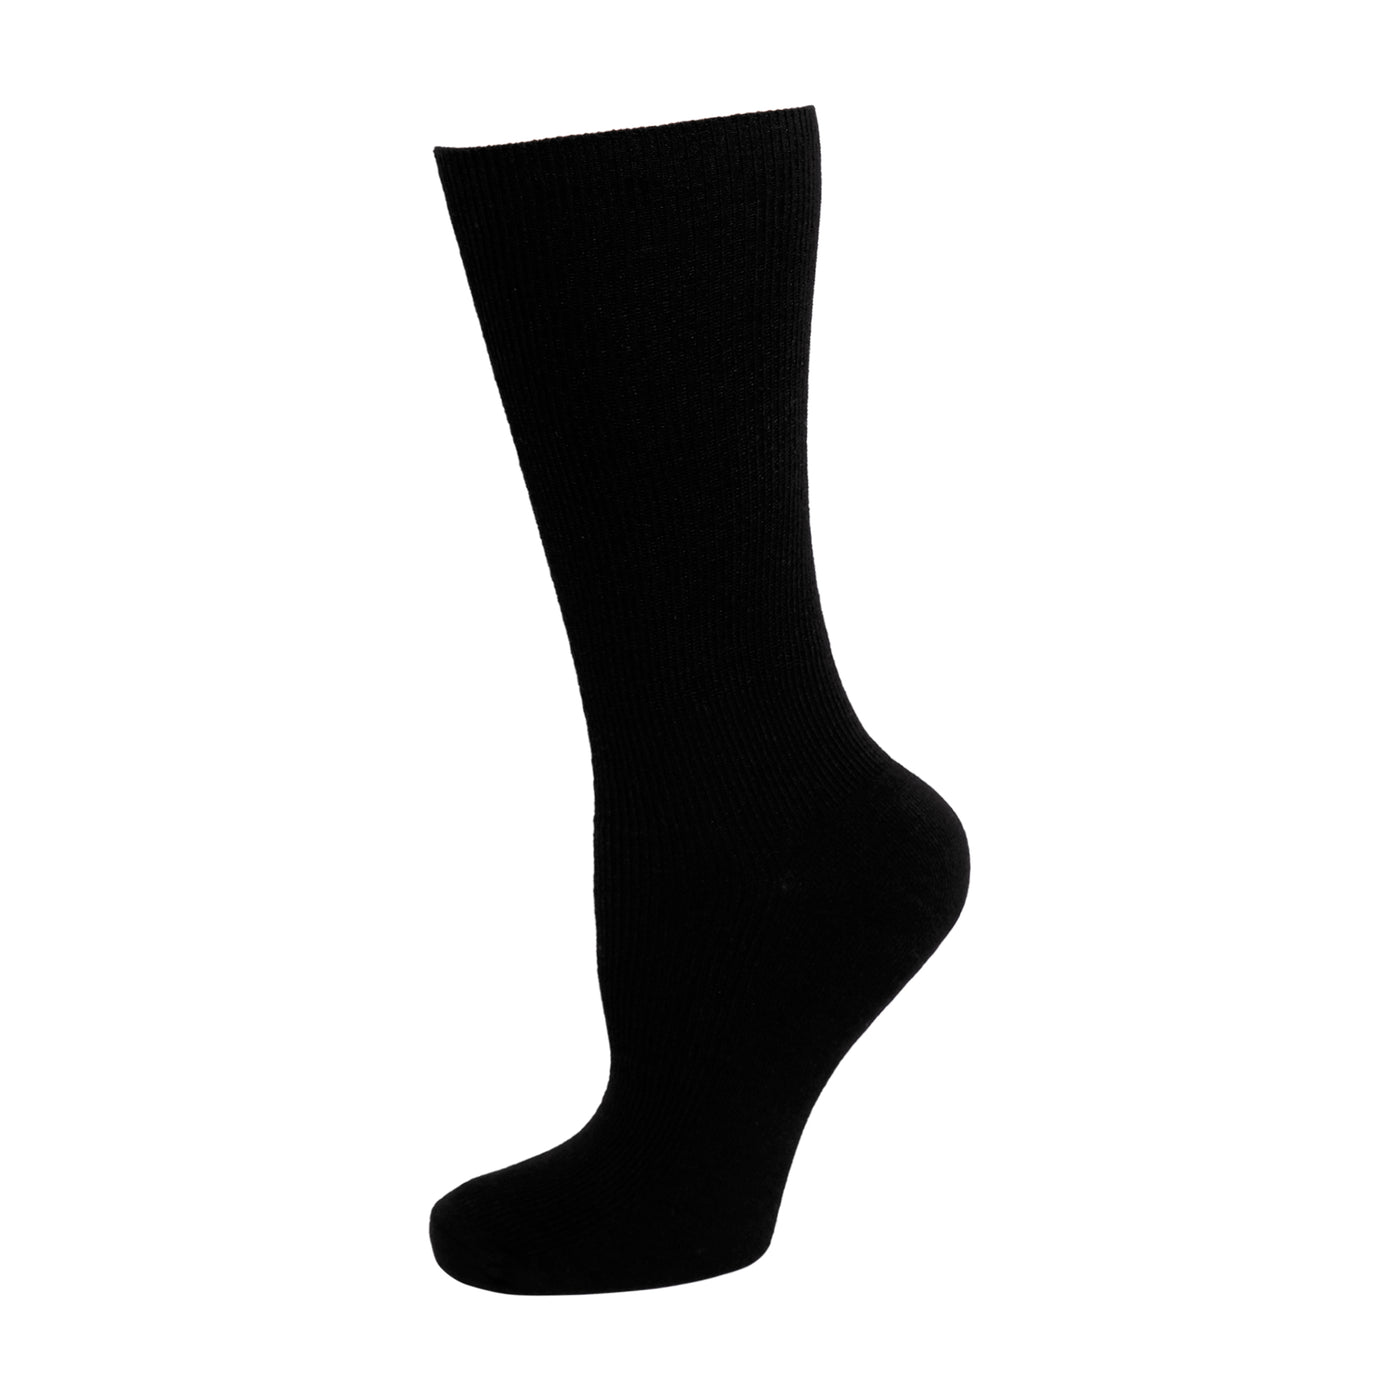 Packshot of Tina high sock in the colour black.